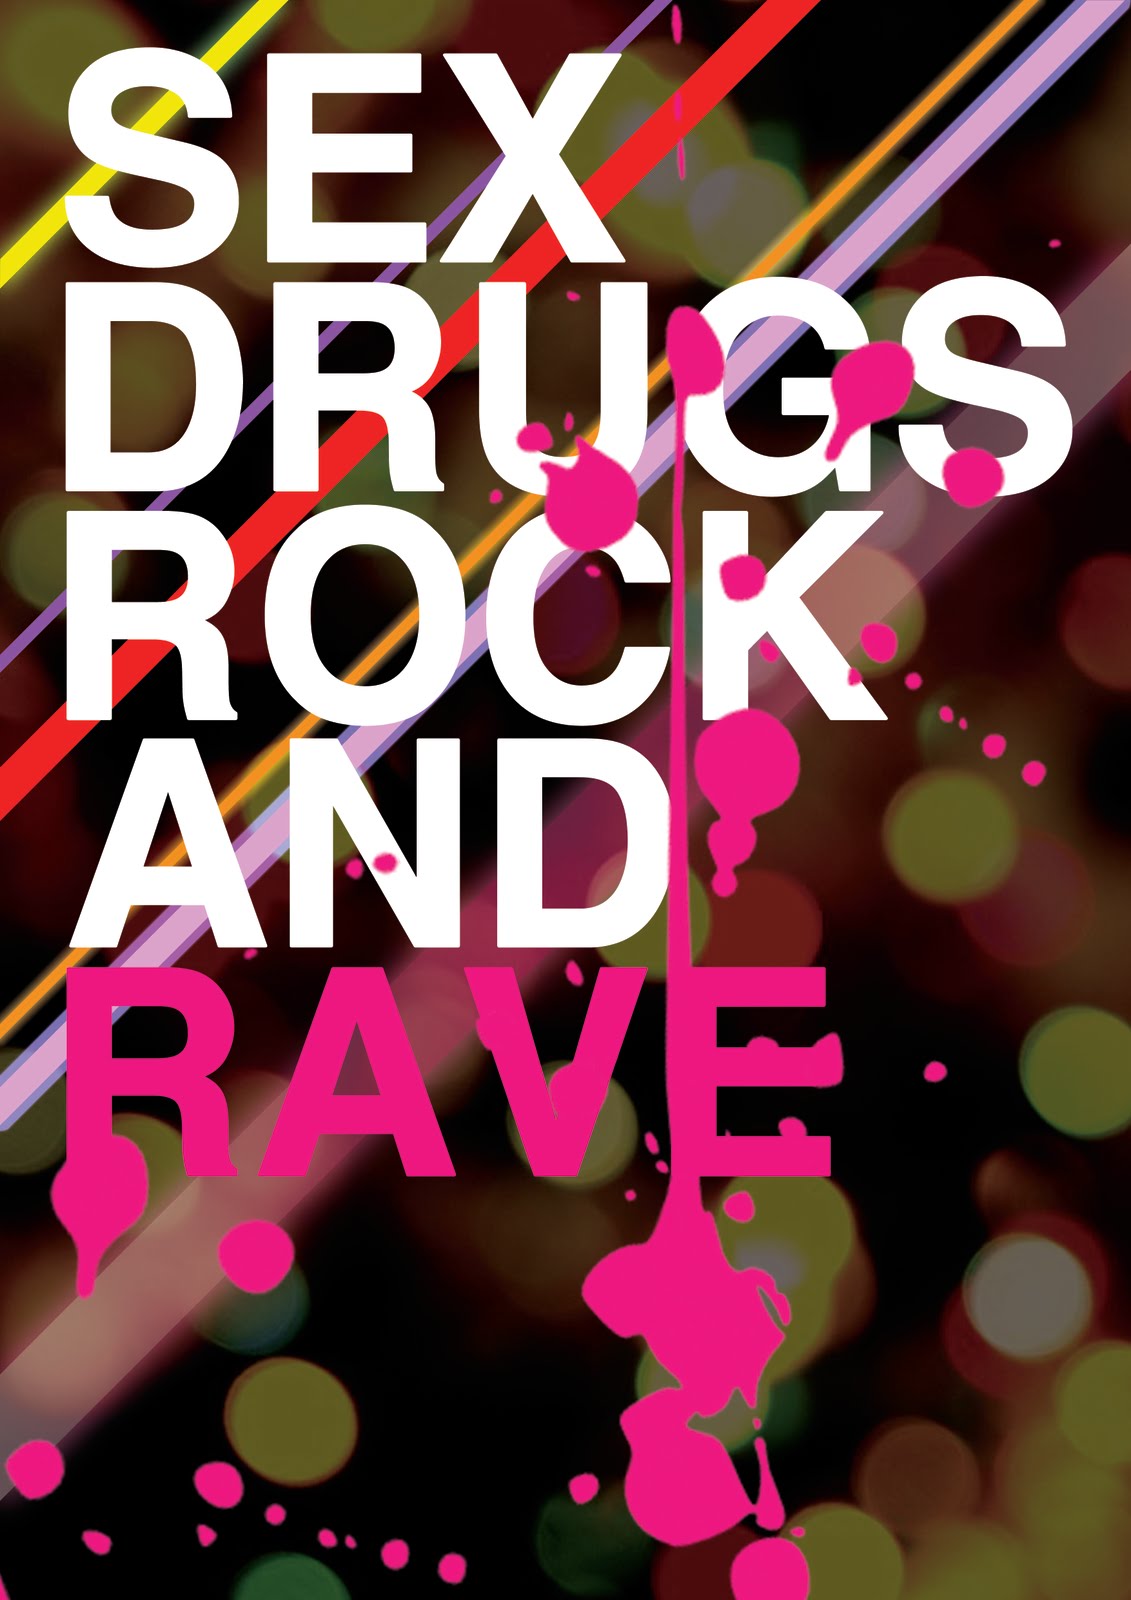 Sam Mallows Design: Rave Typographic Posters